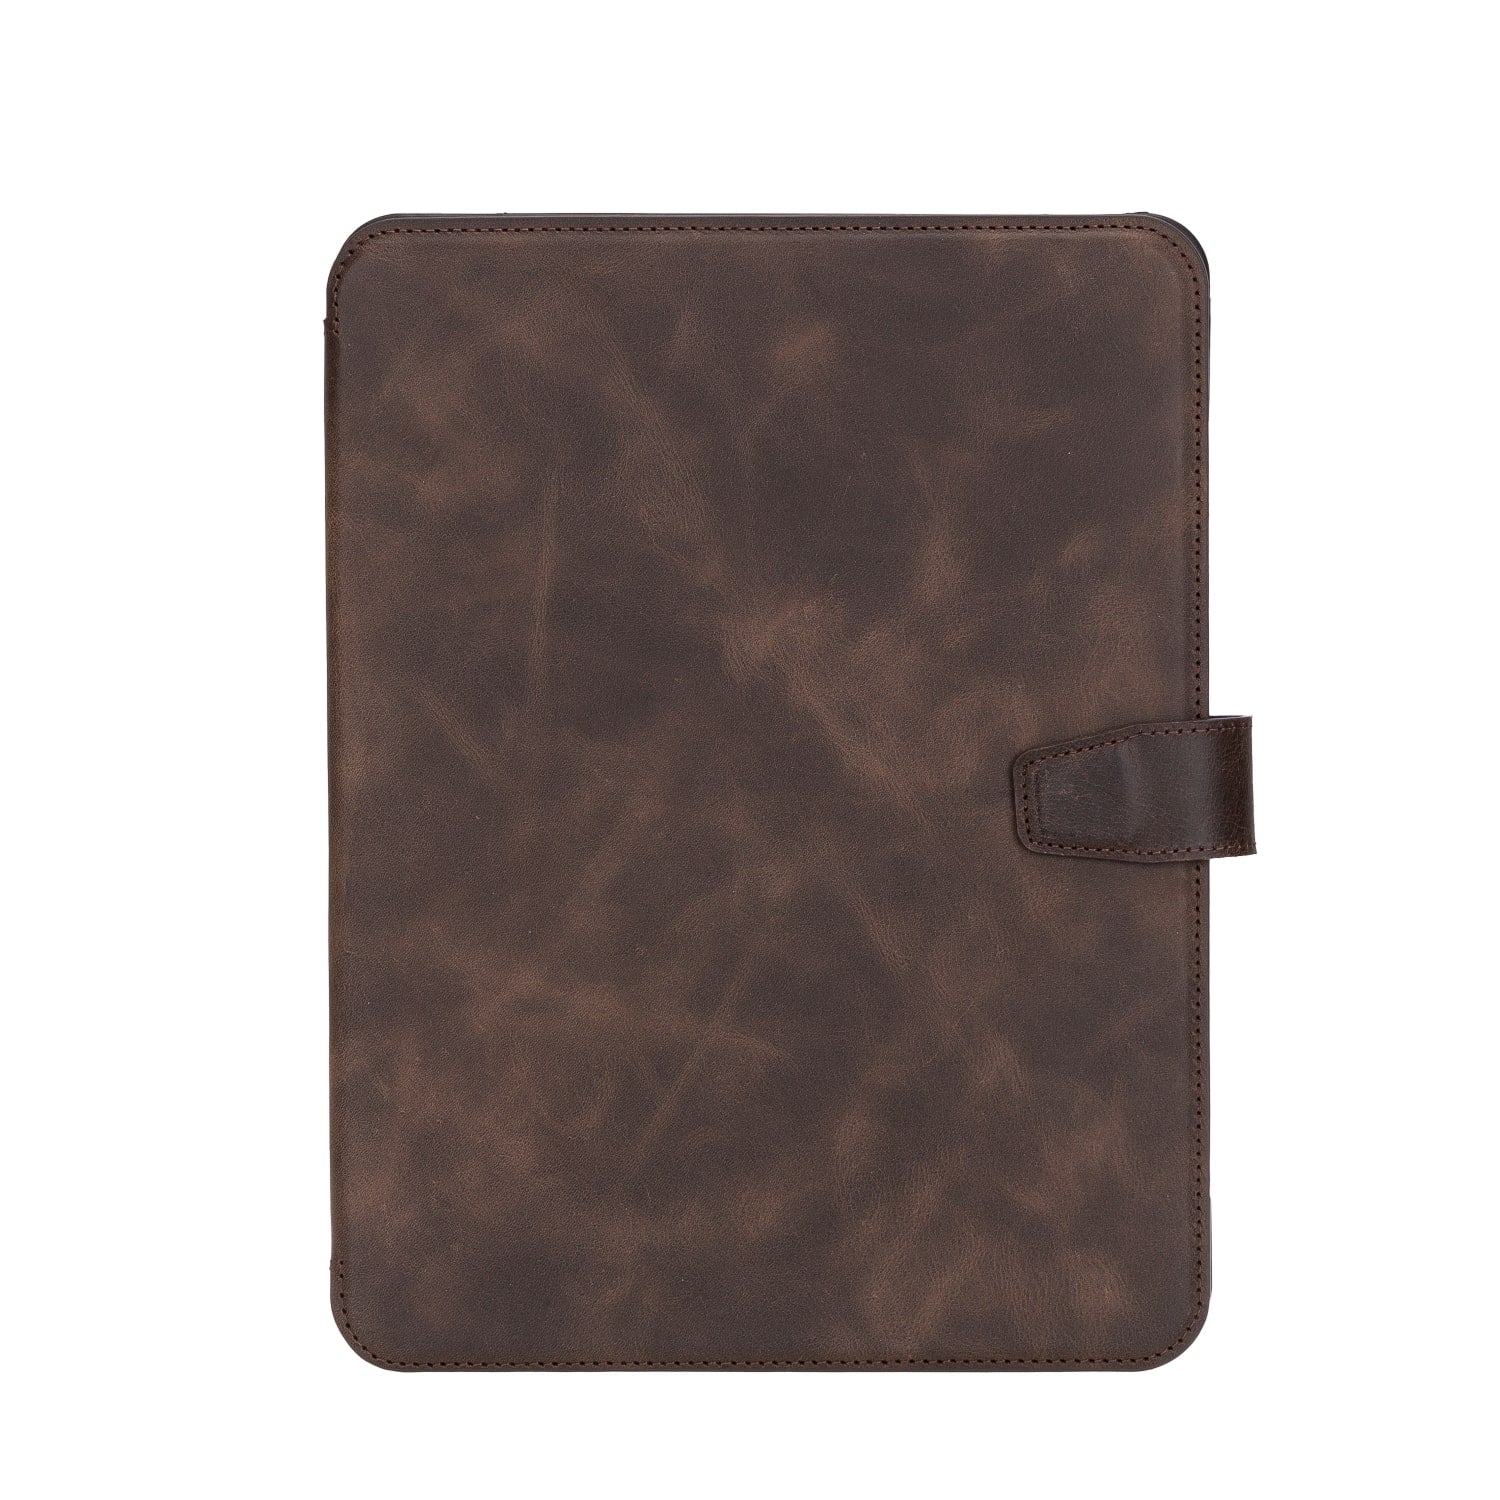 Tan Brown Leather iPad Air 10.9 Inc Smart Folio Case with Apple Pen Holder - Bomonti - 3